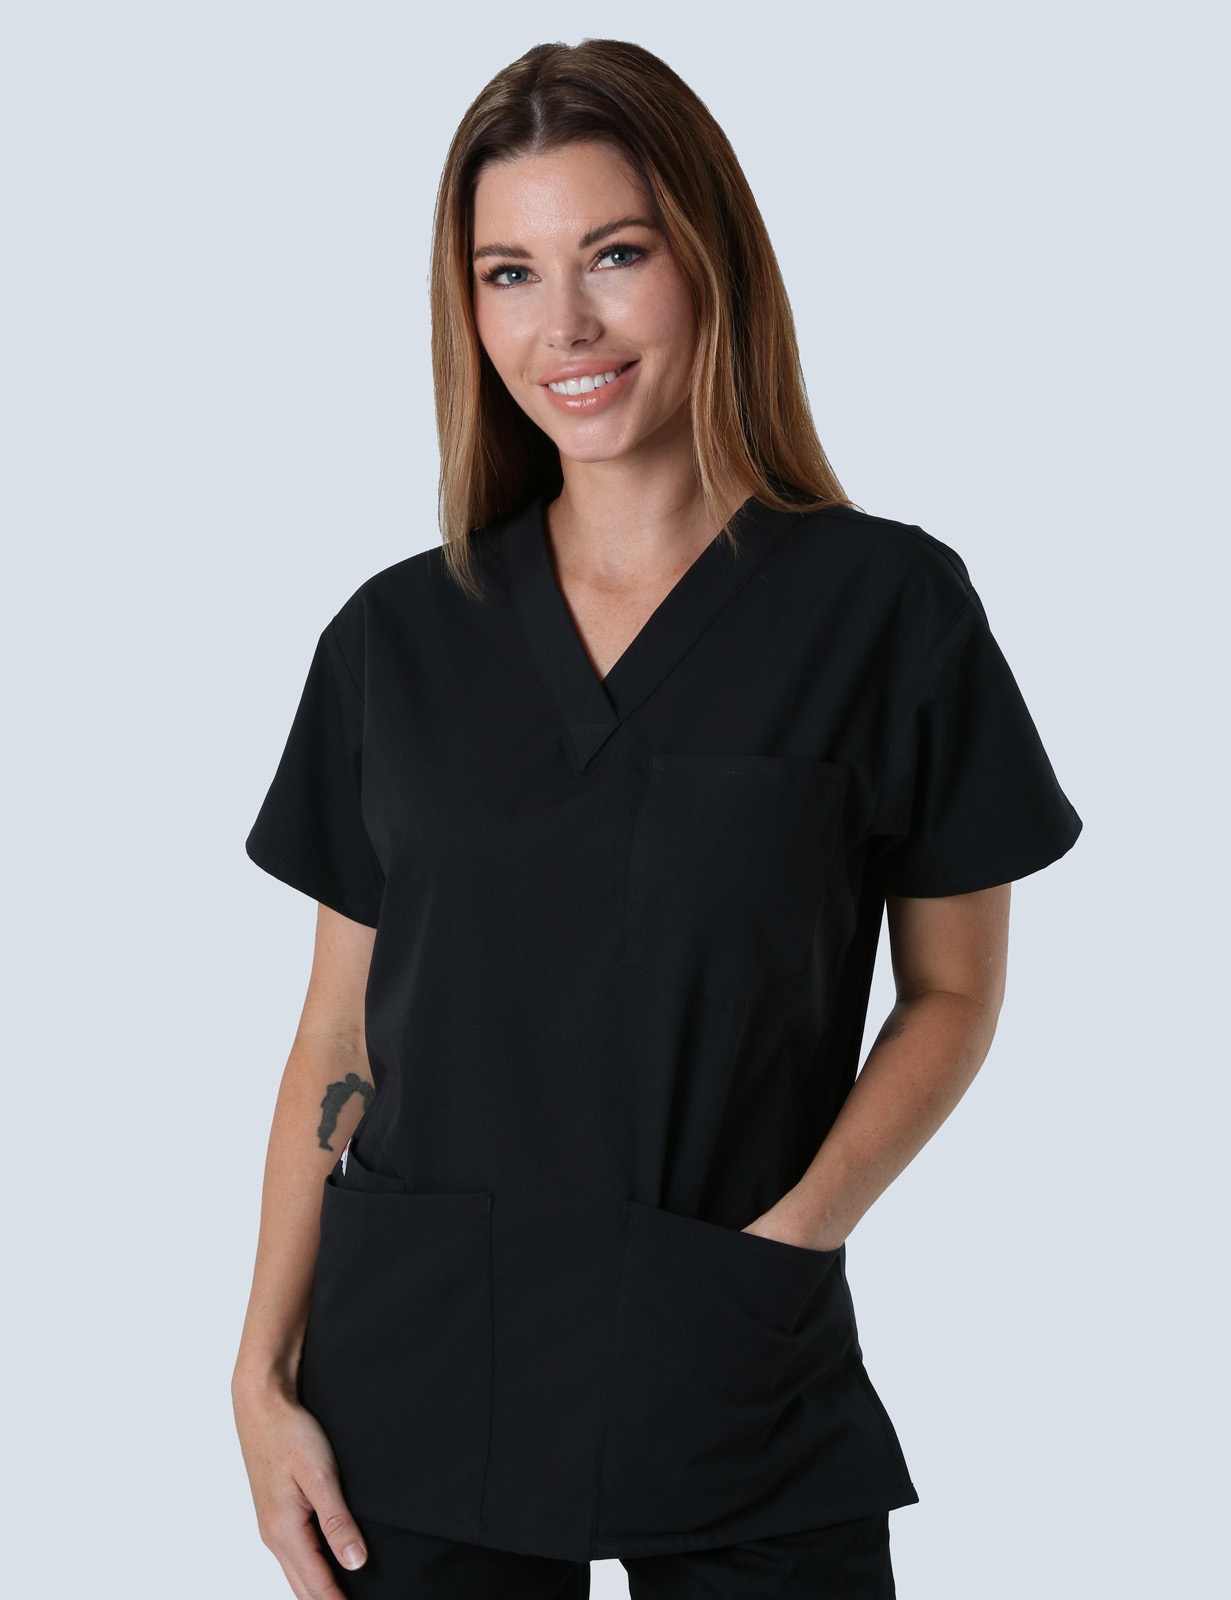 Queensland Children's Hospital Emergency Department Registered  Nurse  Uniform Top Bundle  (4 Pocket Top in Black incl Logos)